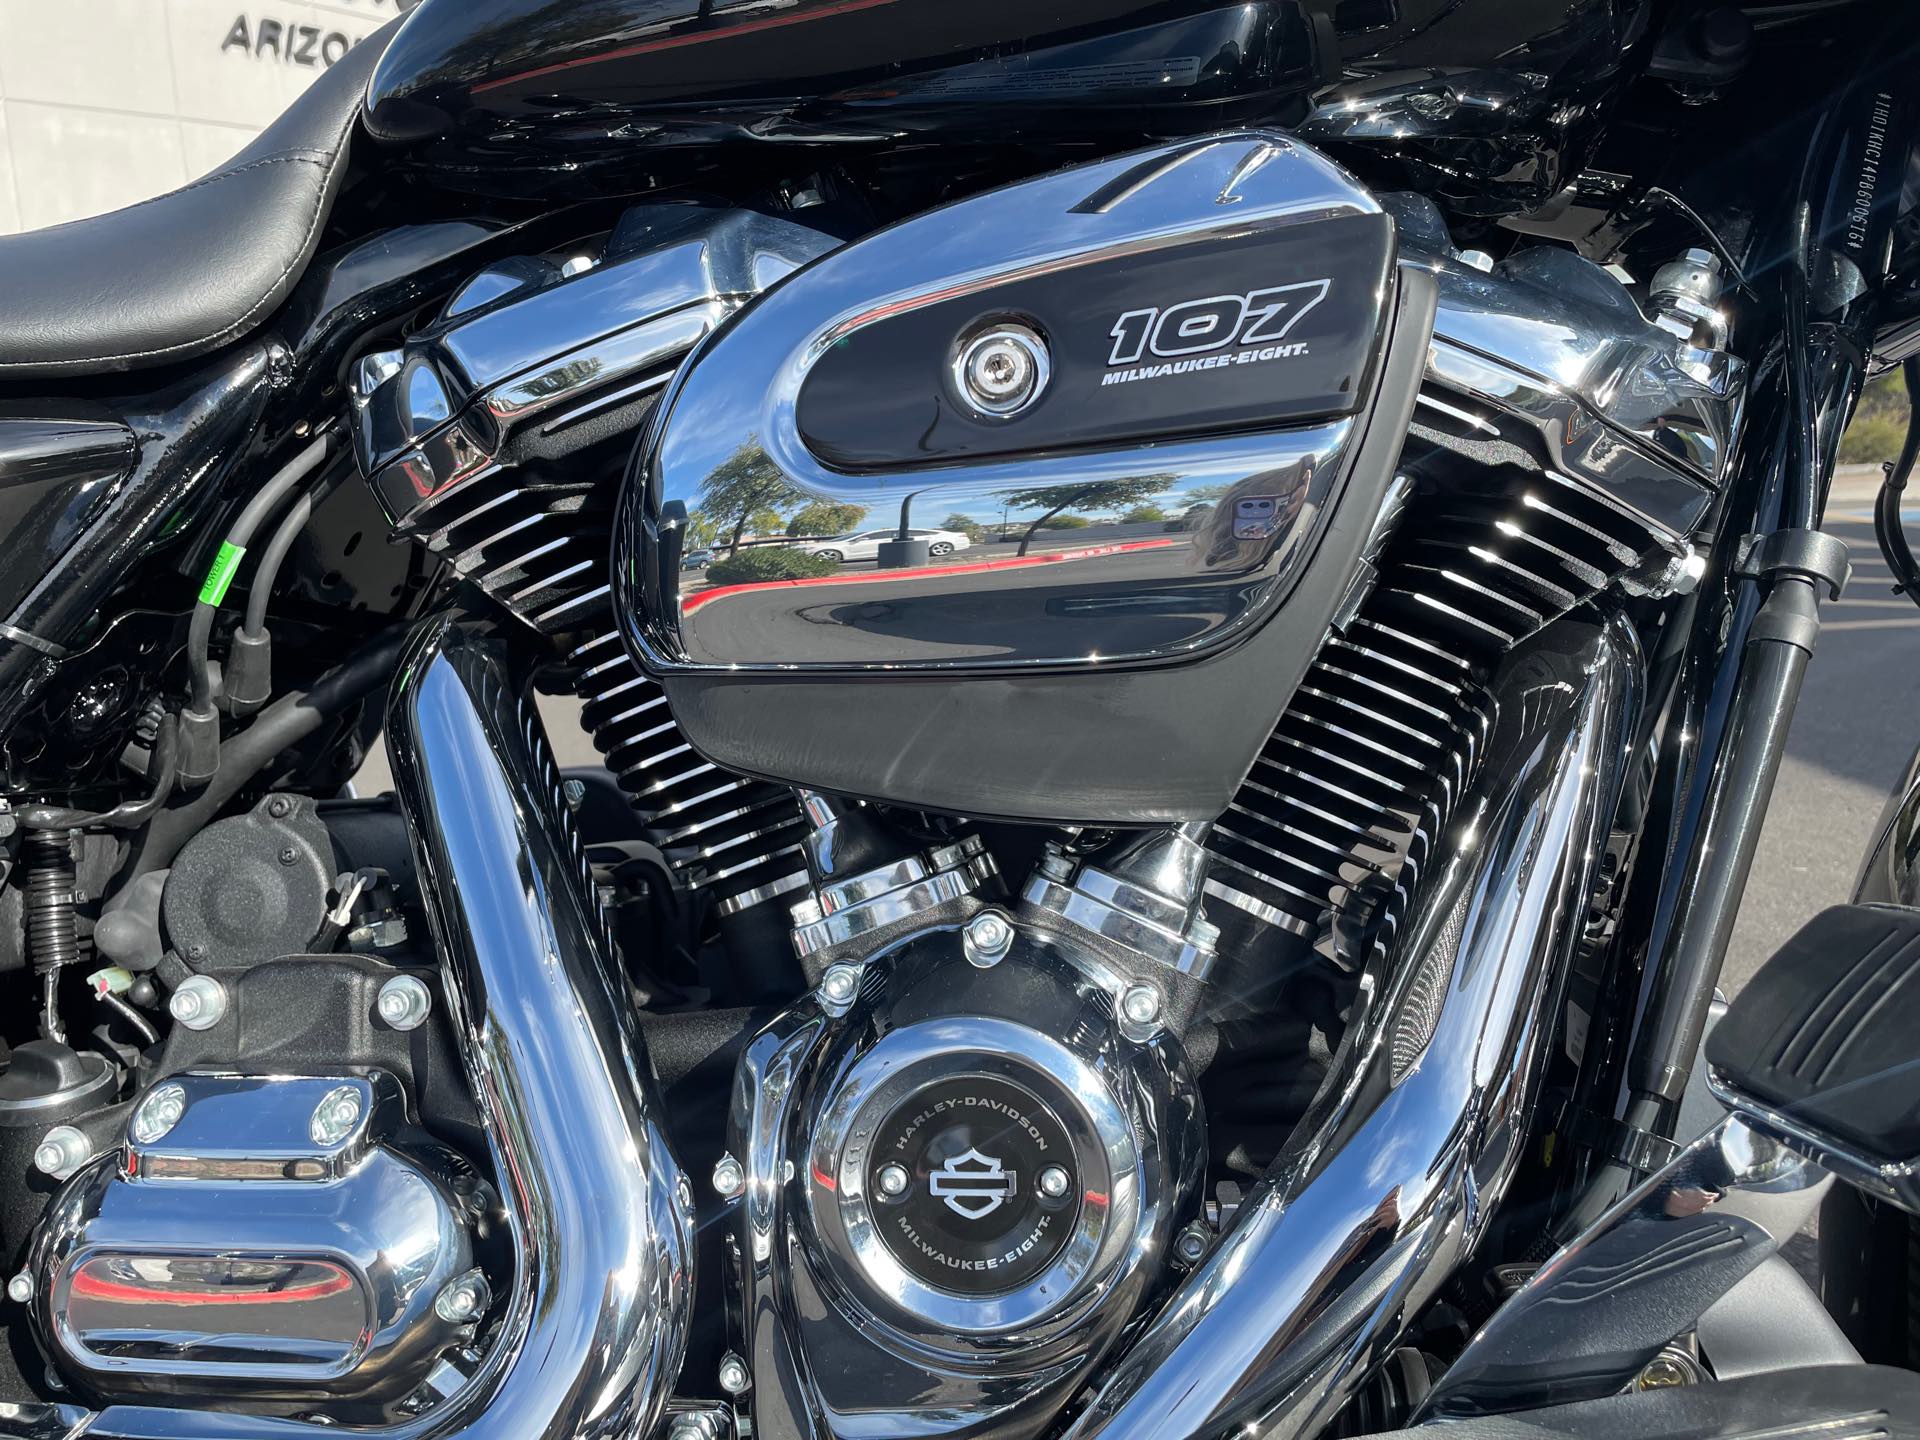 2023 Harley-Davidson Road Glide Base at Buddy Stubbs Arizona Harley-Davidson